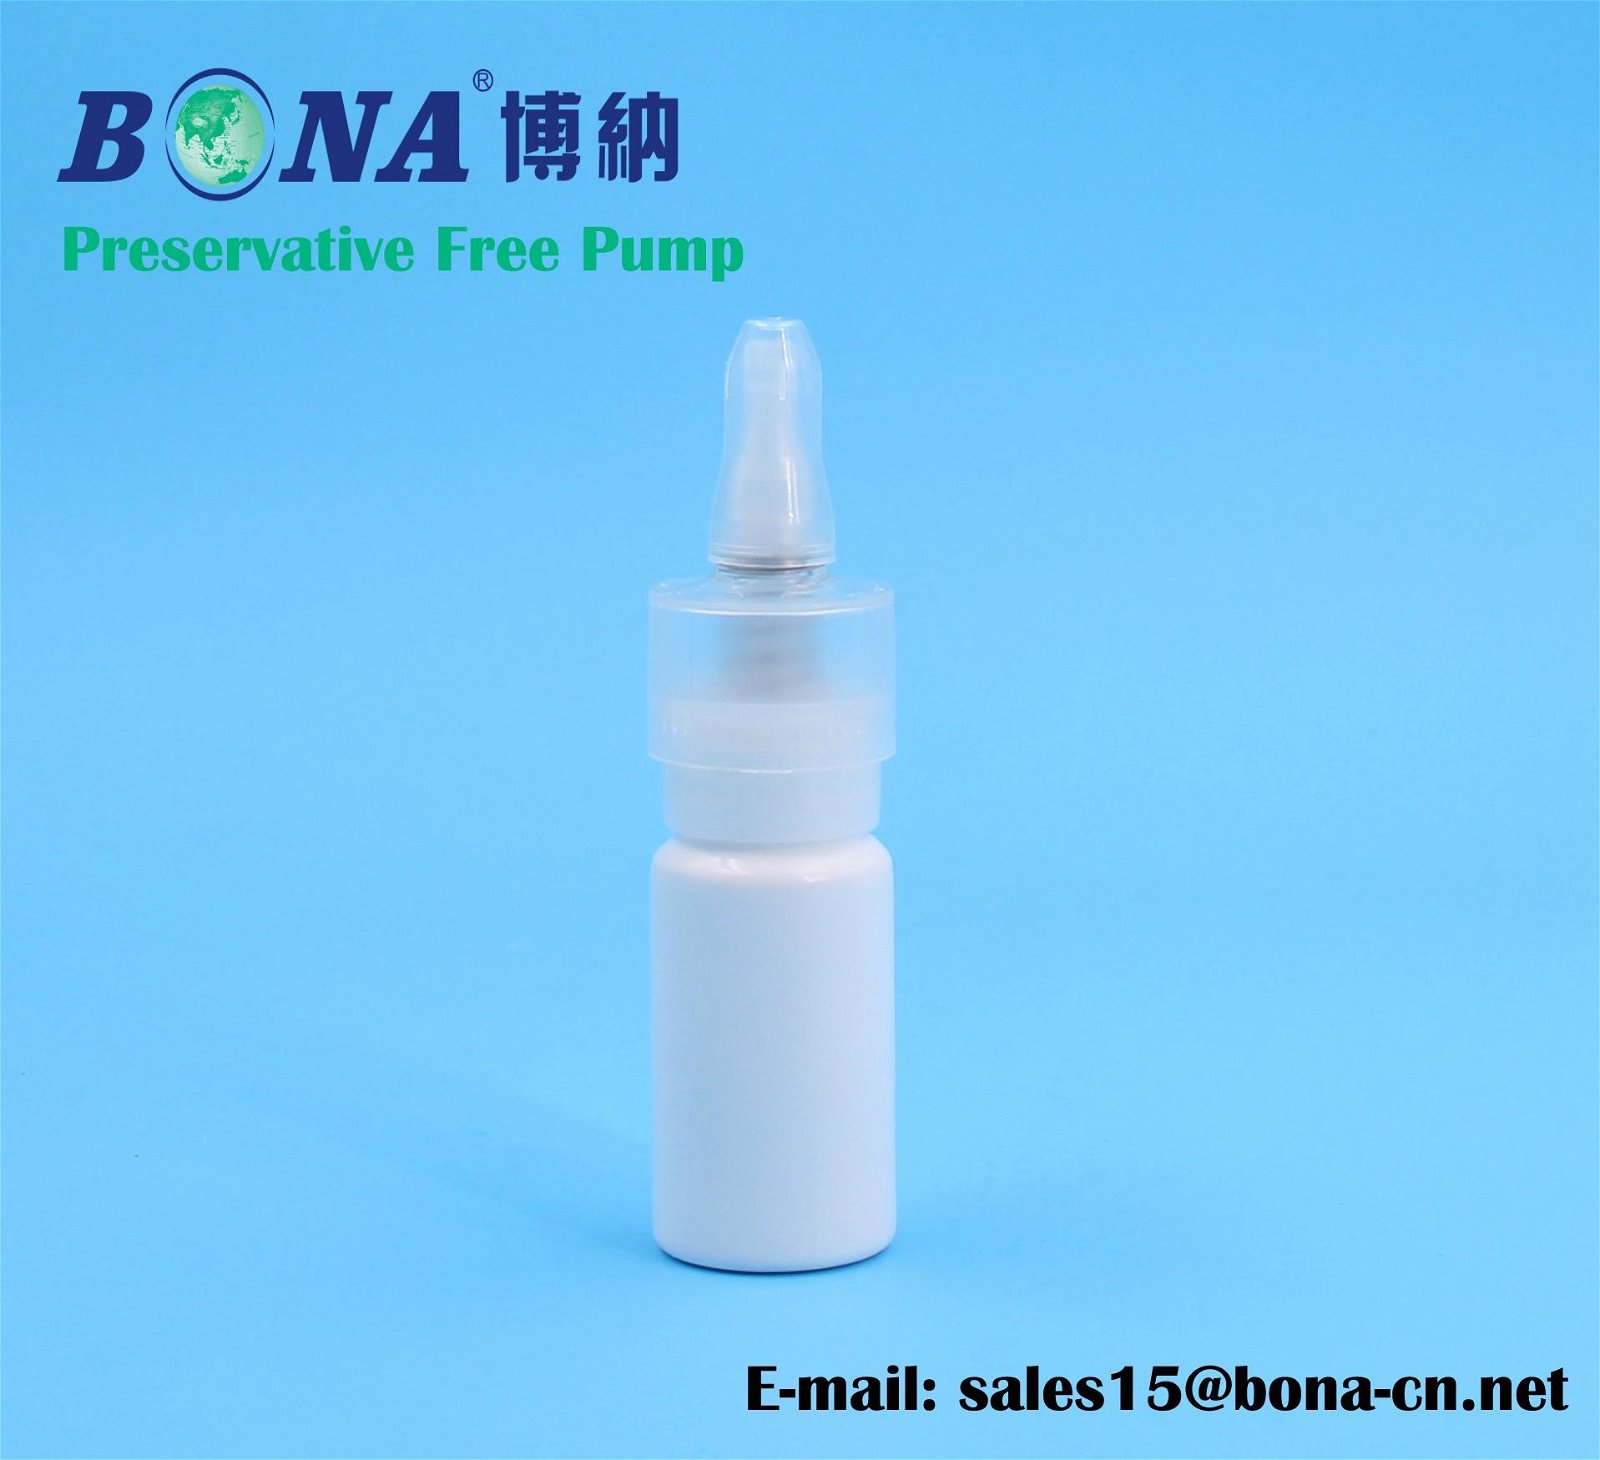 Bona medicine packaging supplier advanced preservative pump flonase sprays